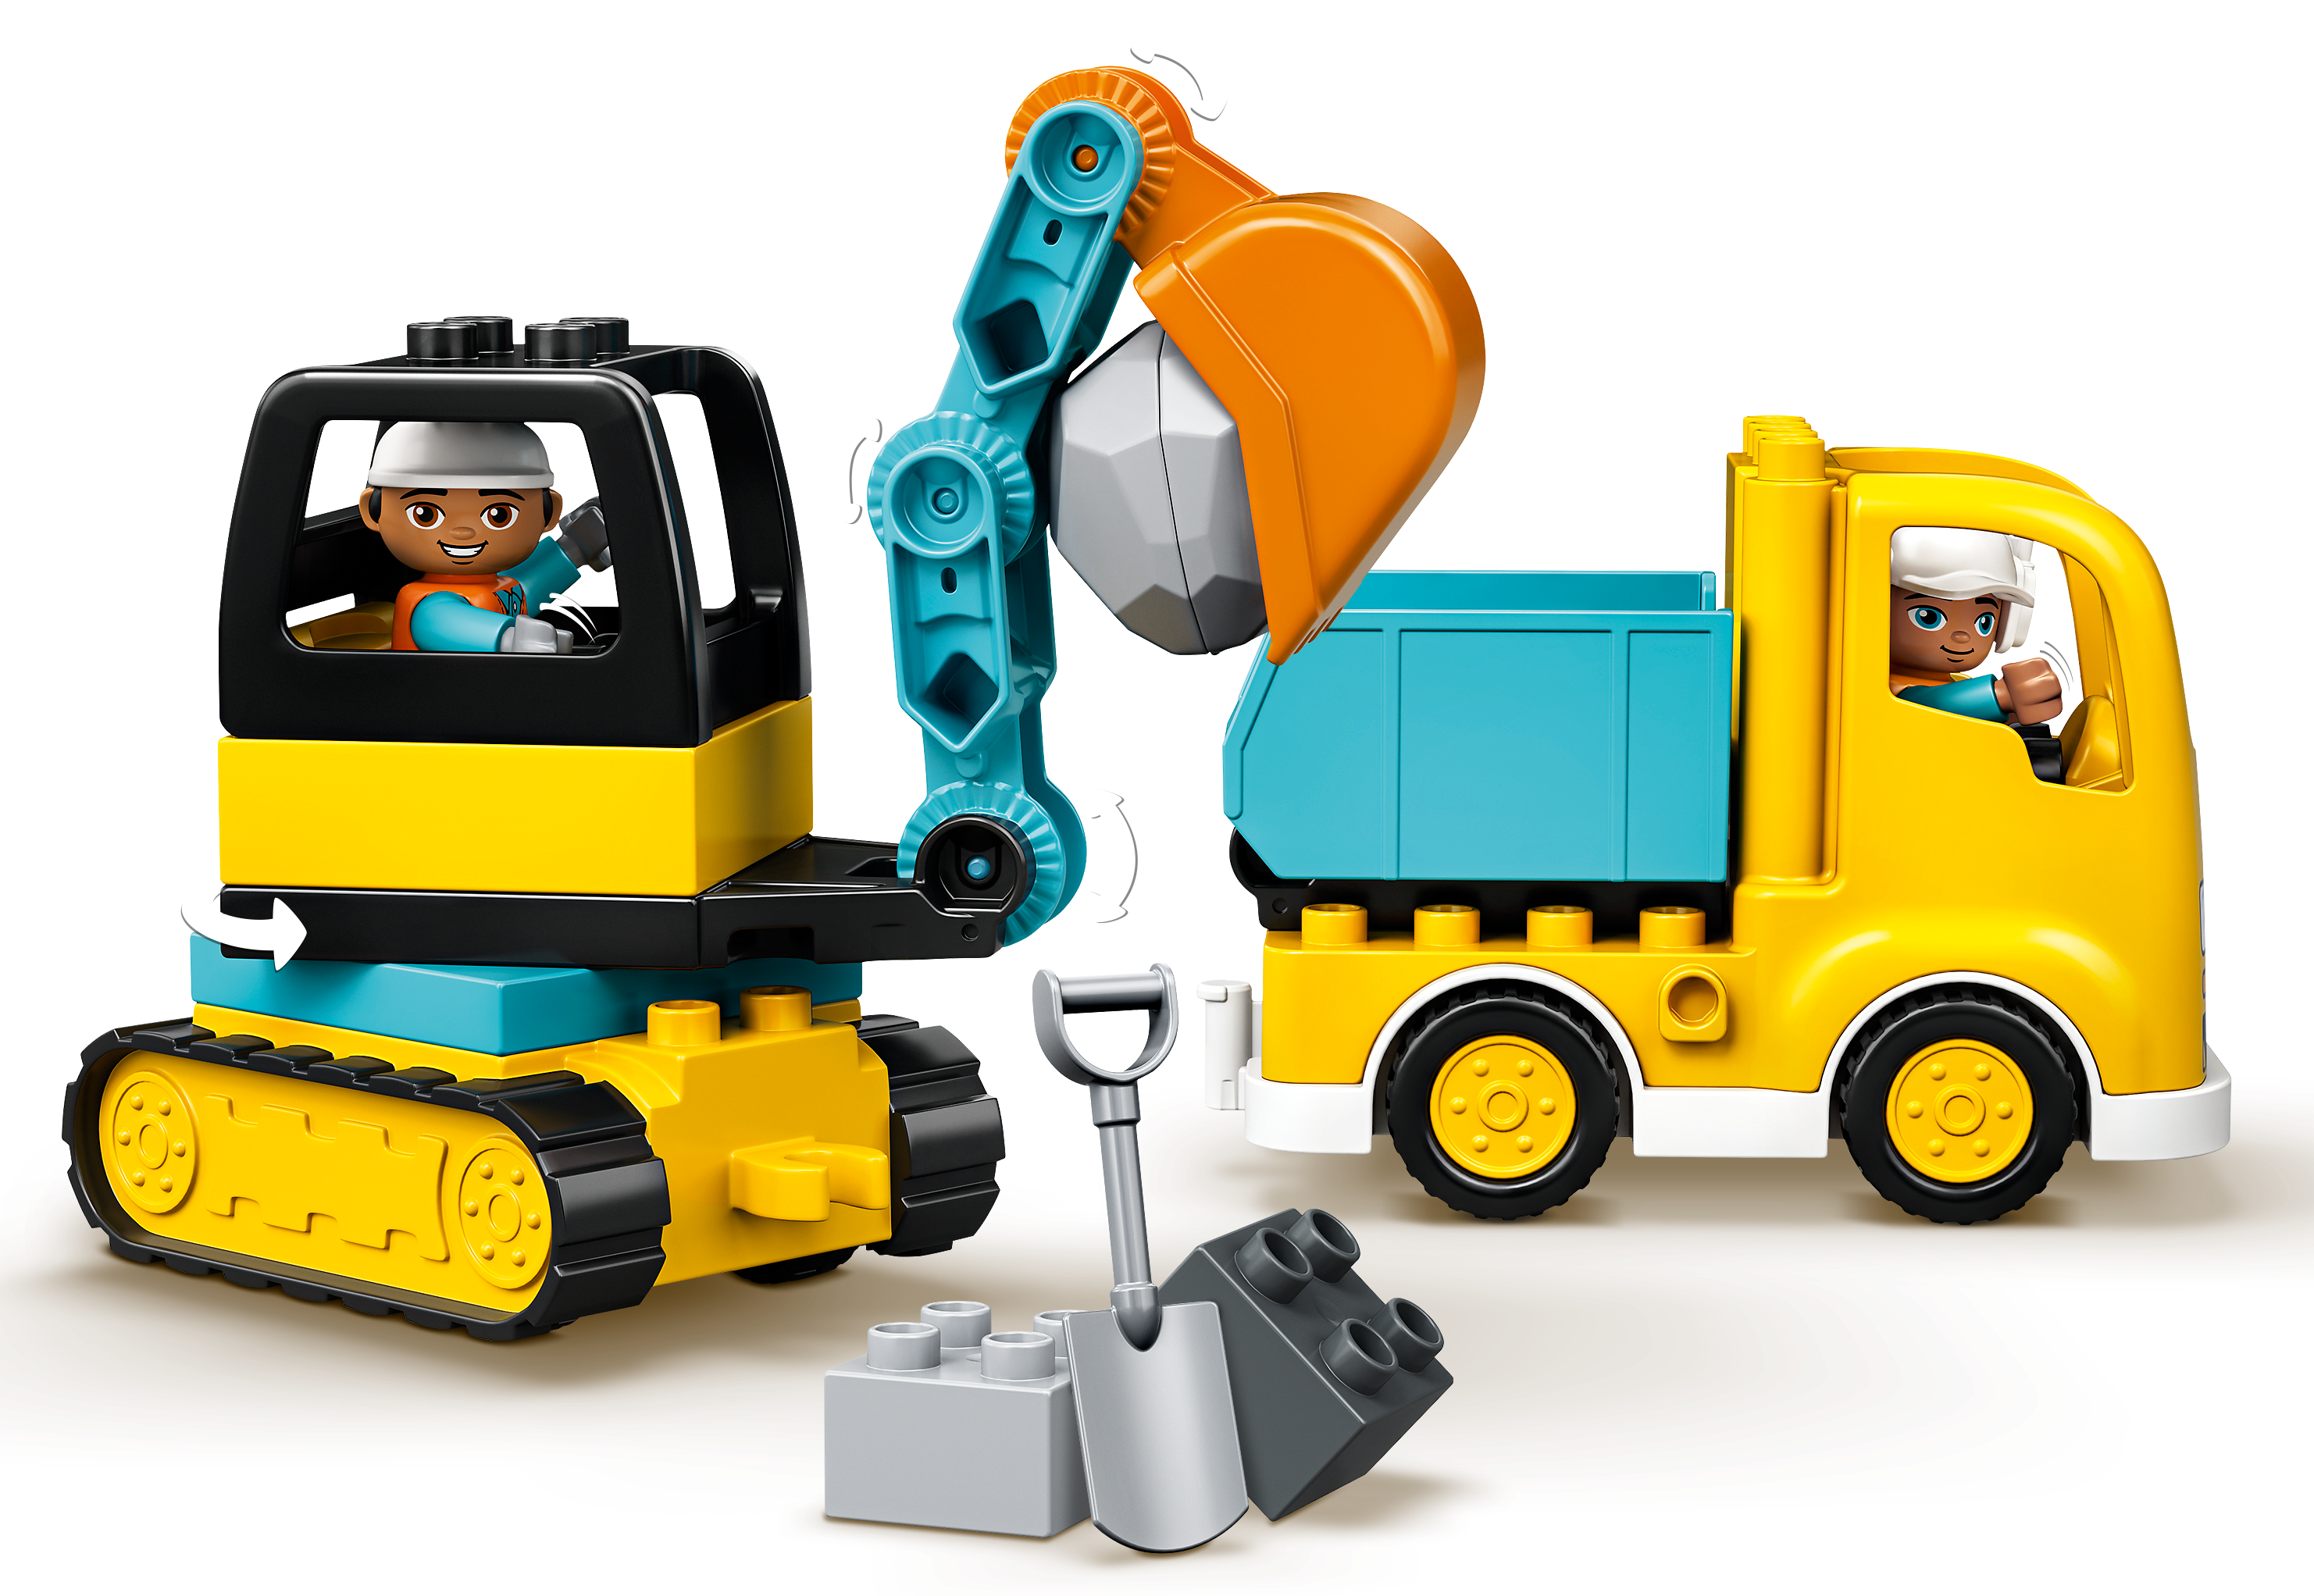 Details about   Lego Duplo YELLOW BULLDOZER CRANE Vehicle for CONSTRUCTION w/ Orange Bucket